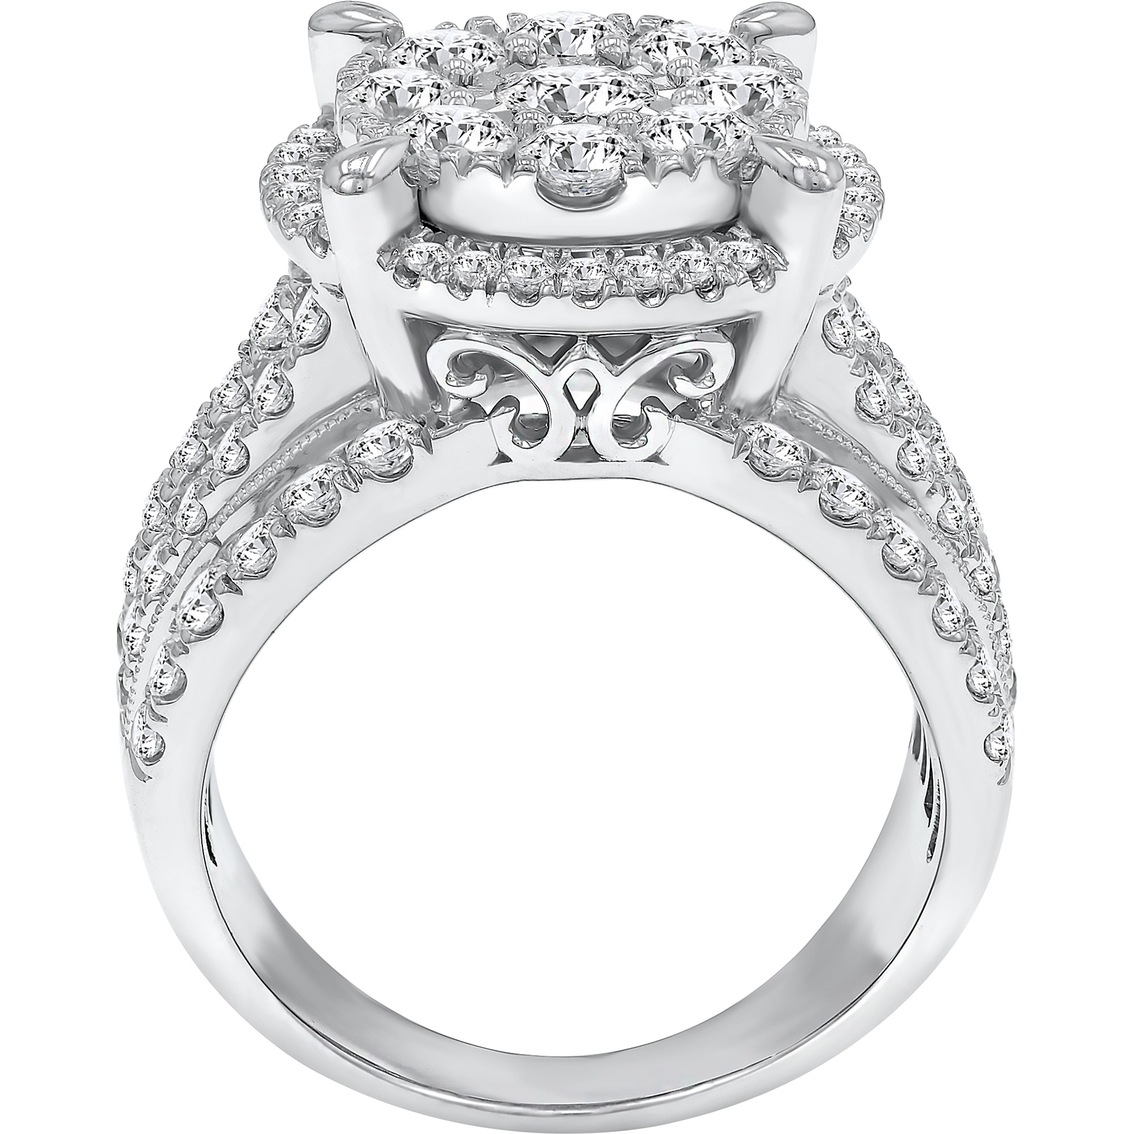 10K White Gold 3 CTW Diamond Ring Size 7 - Image 4 of 4